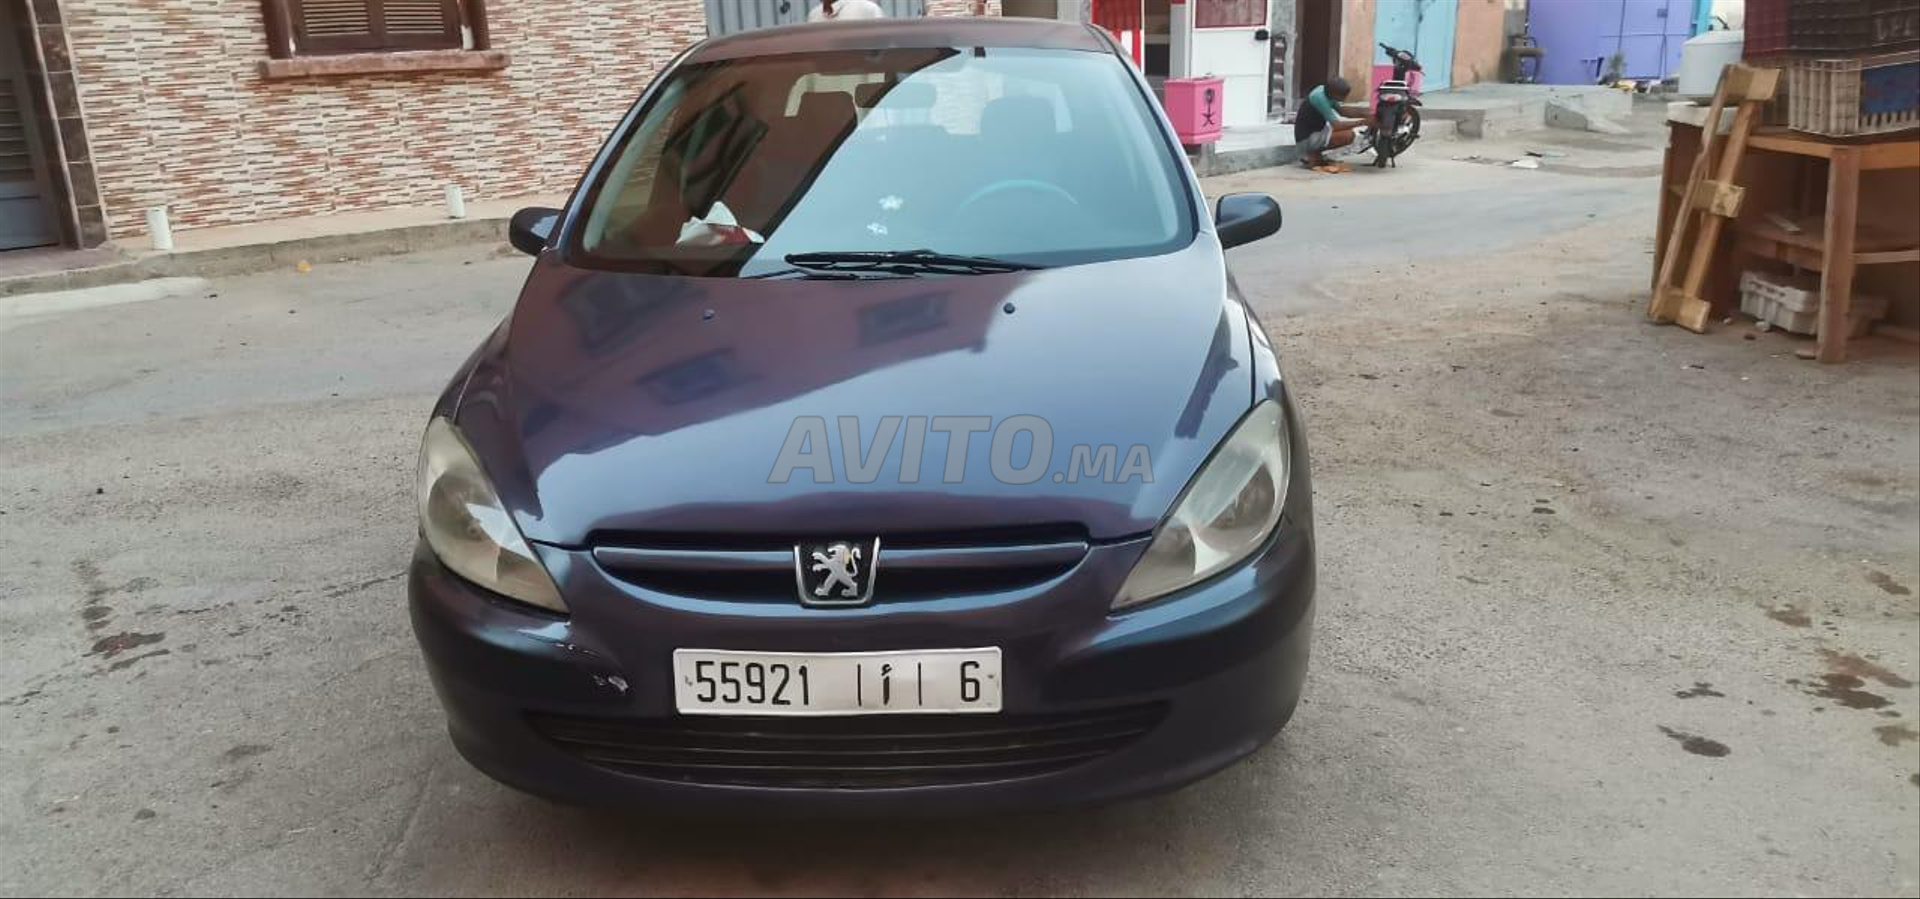 Peugeot 307 7 cv pas cher à vendre, Avito Maroc